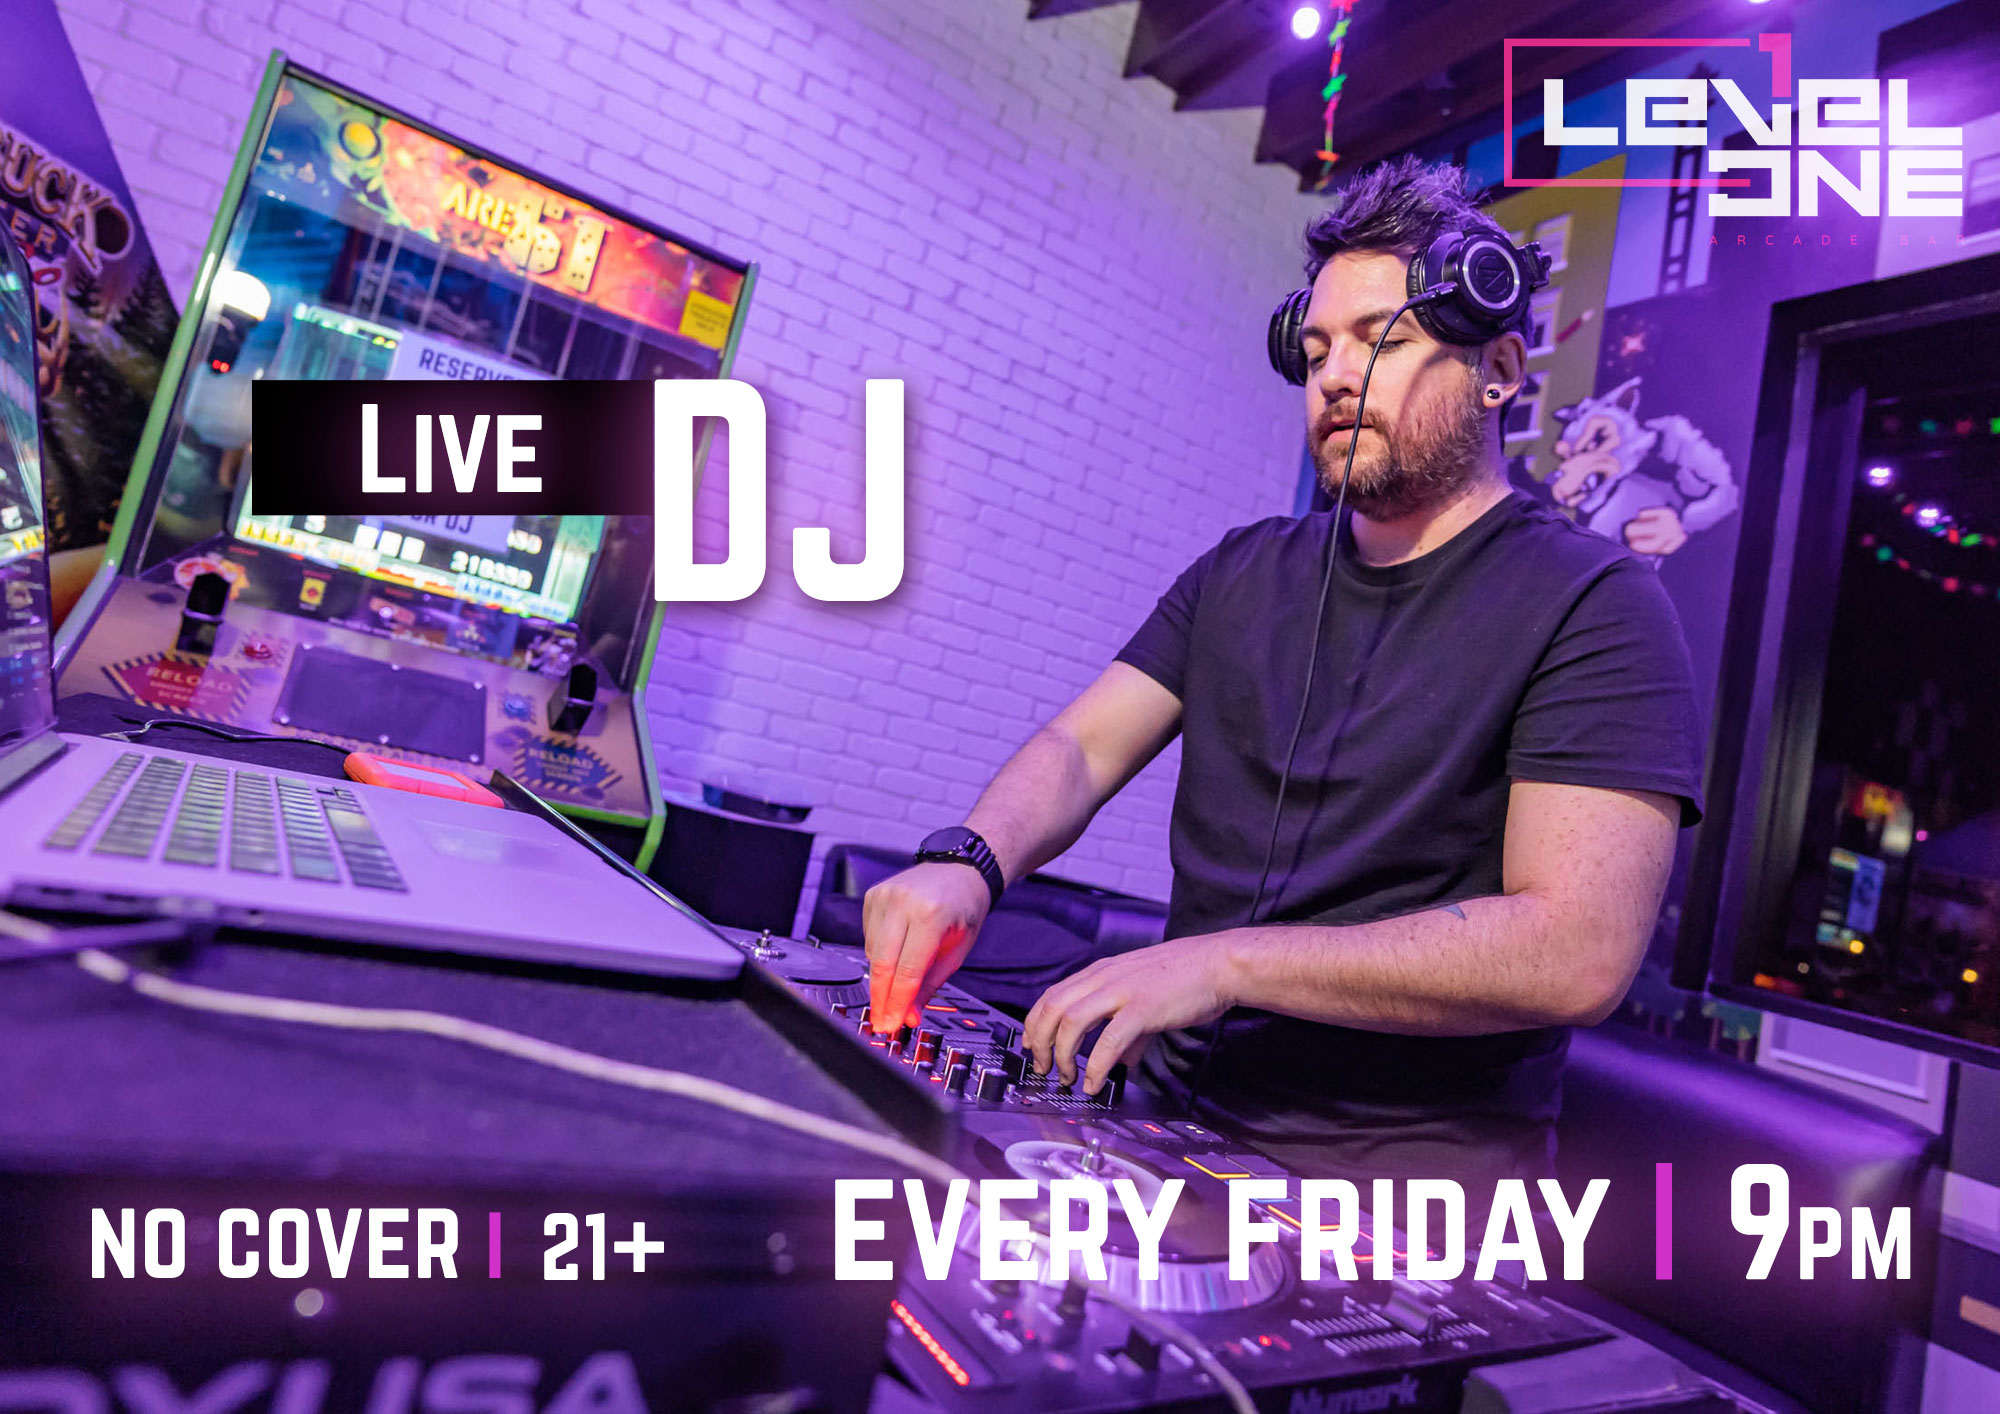 Live DJ Friday's